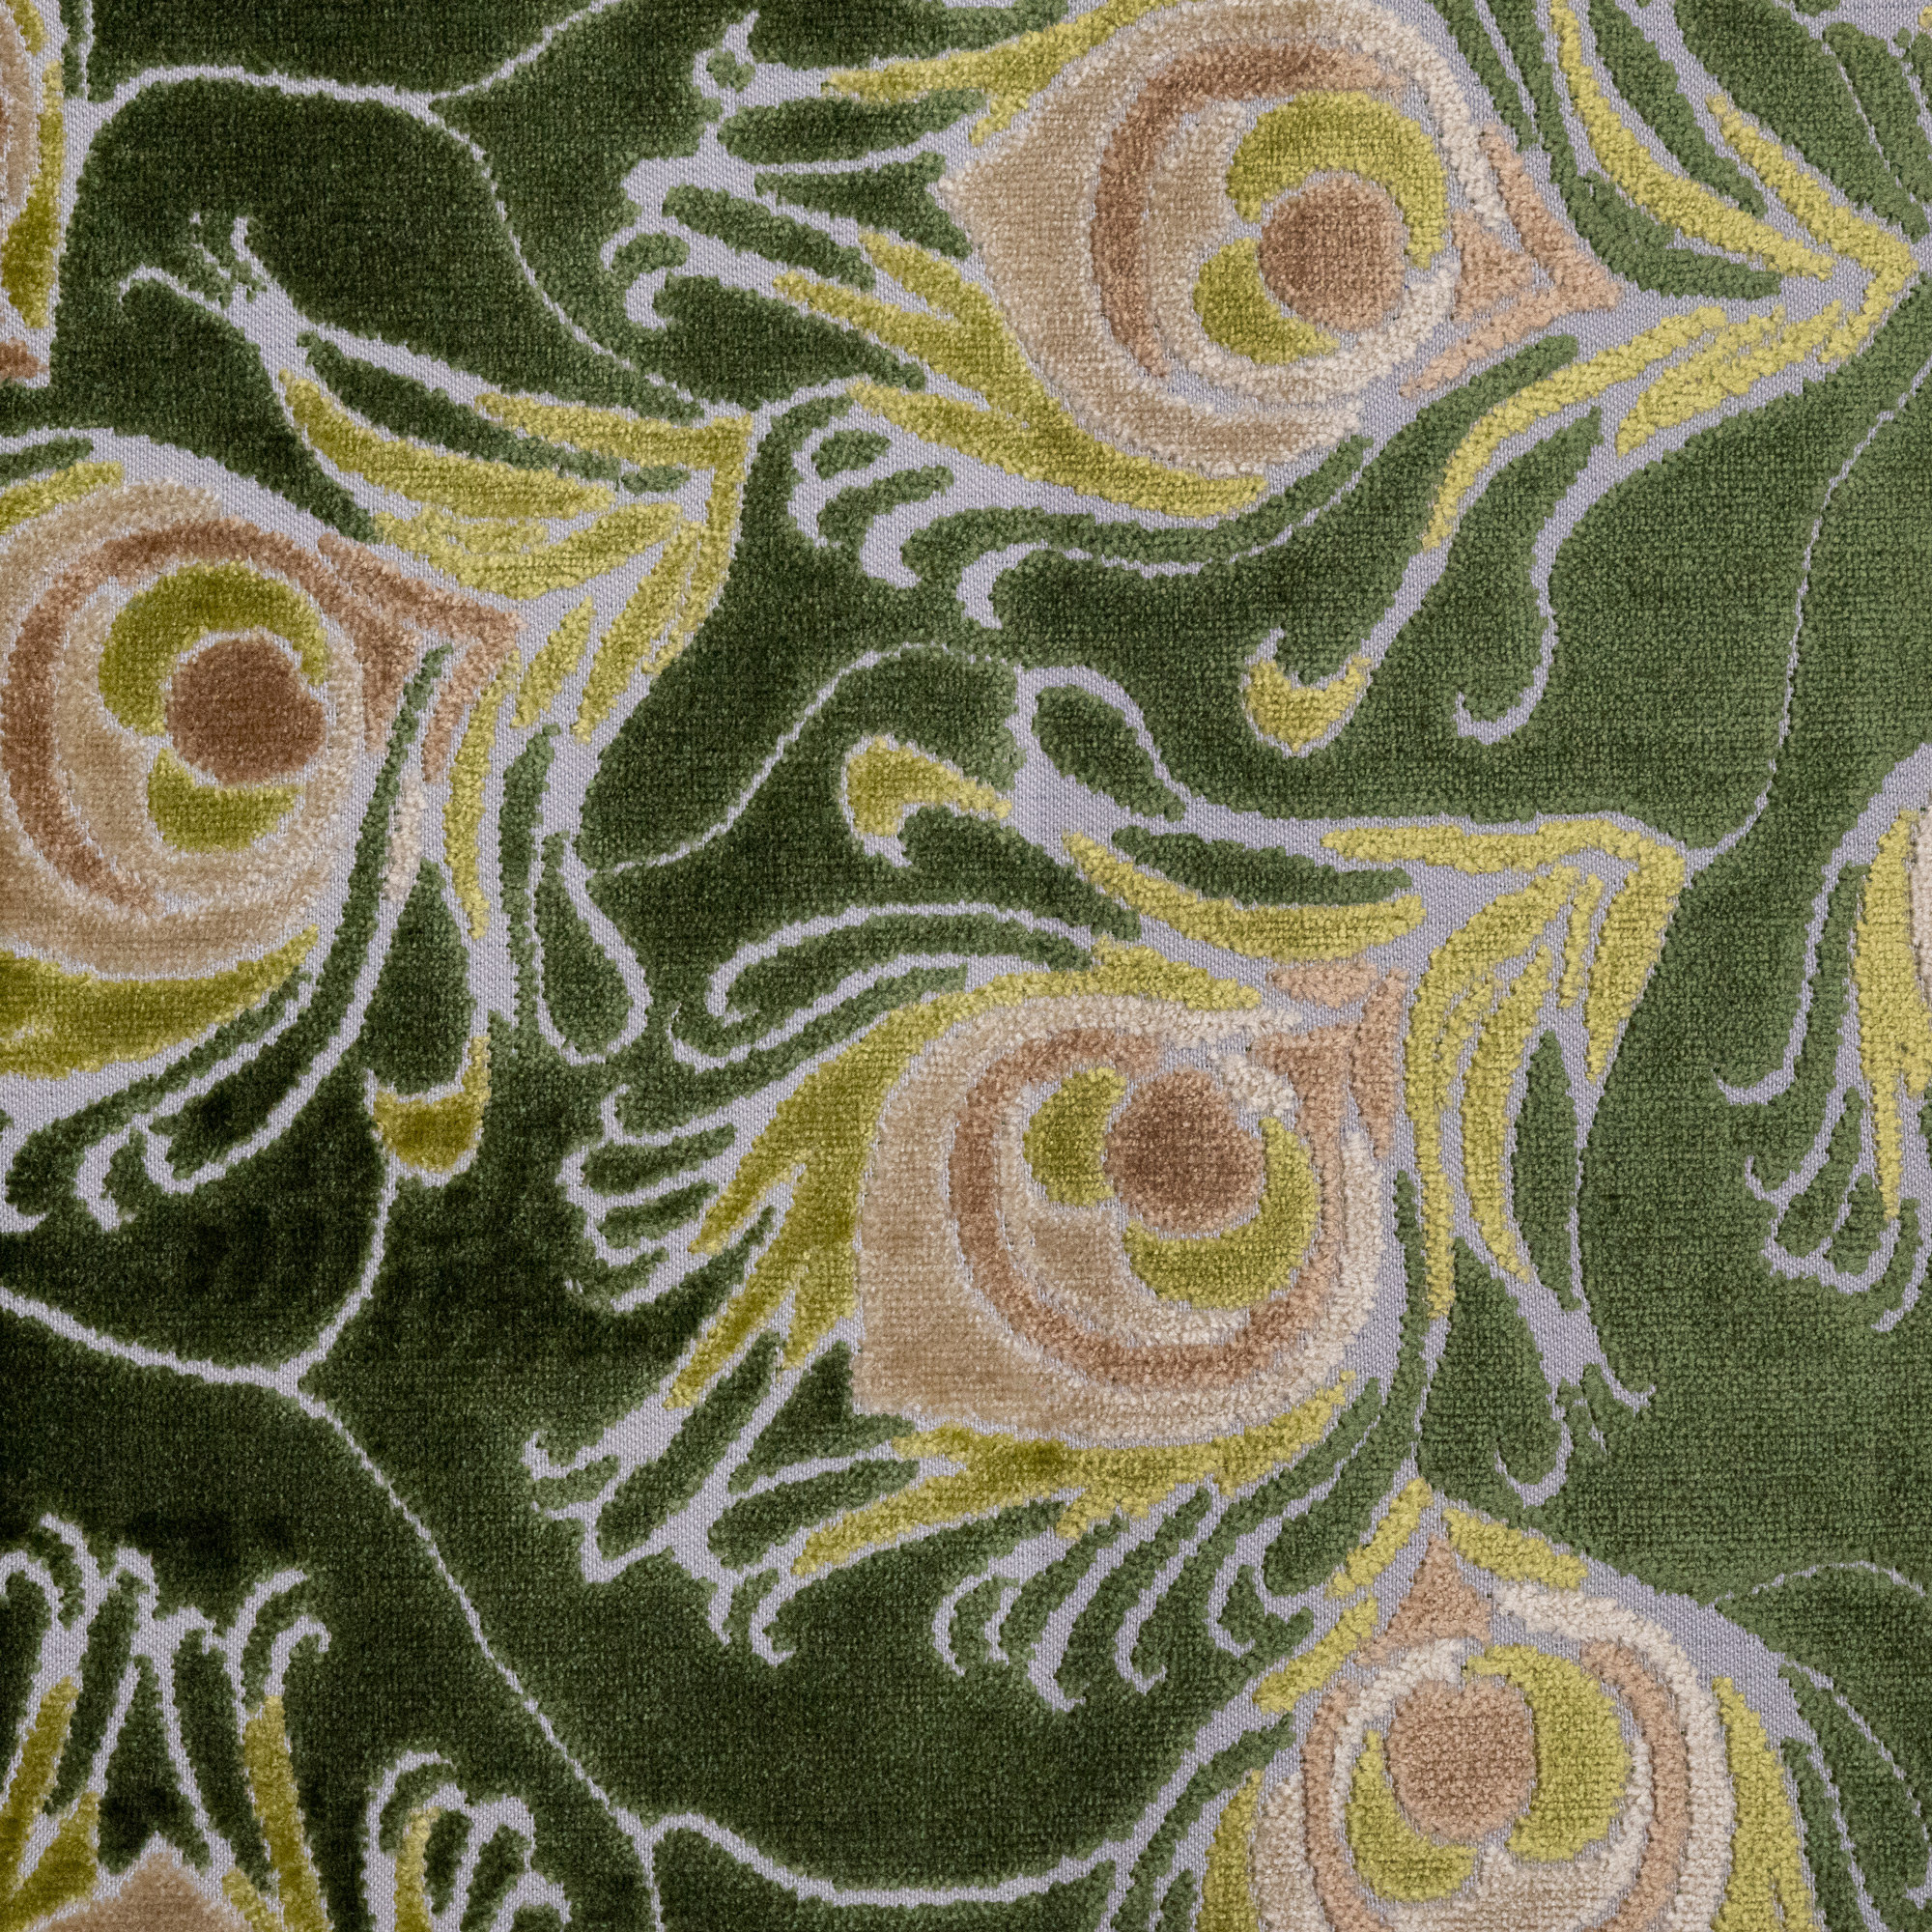 Plumage-Hawaii Cut Velvet Upholstery Fabric Top Fabric Color: Savannah